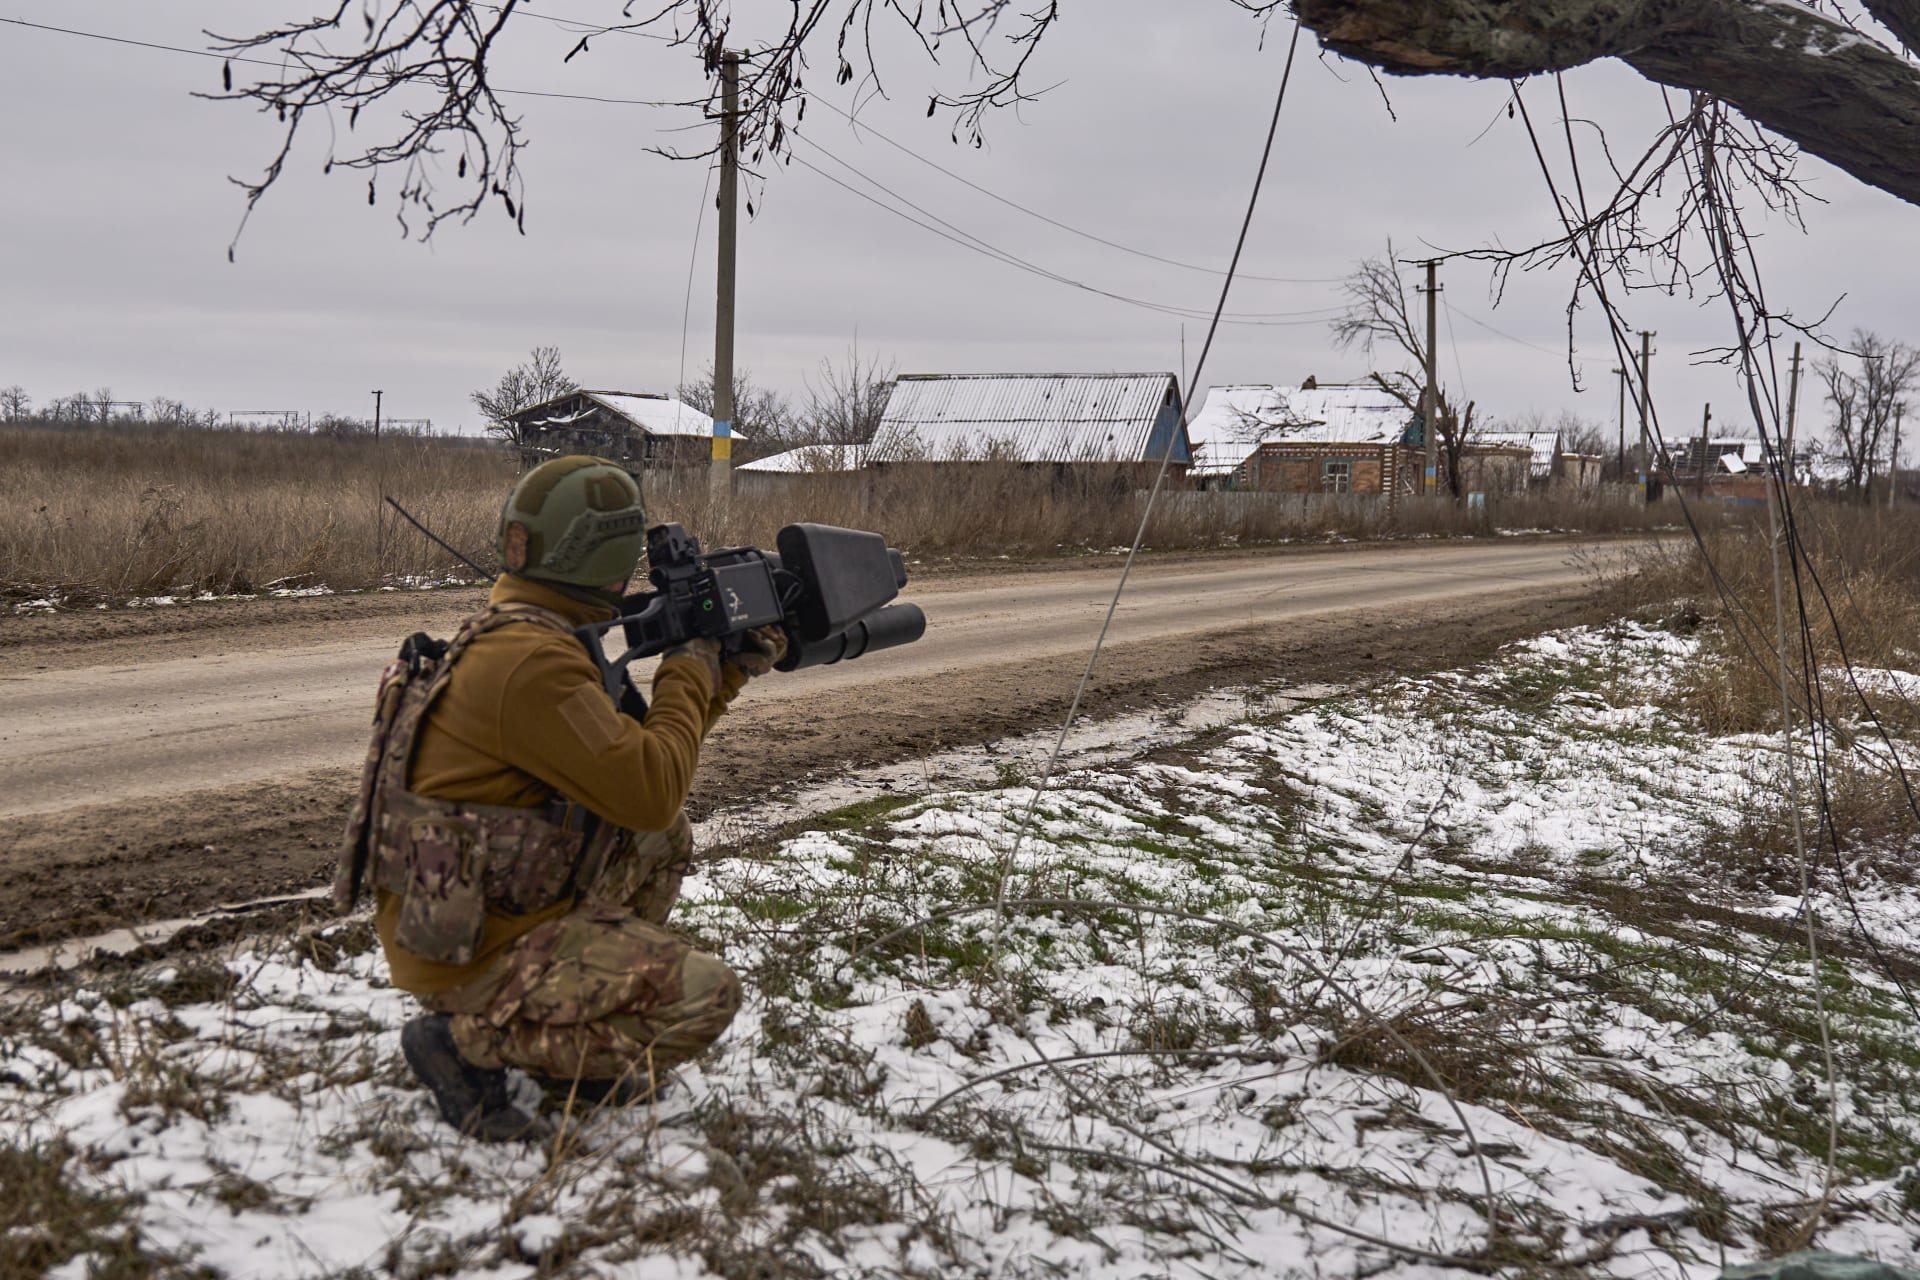 Ukrajinský voják z 10. samostatné horské útočné brigády „Edelweiss“ drží speciální protidronové dělo nedaleko Bachmutu